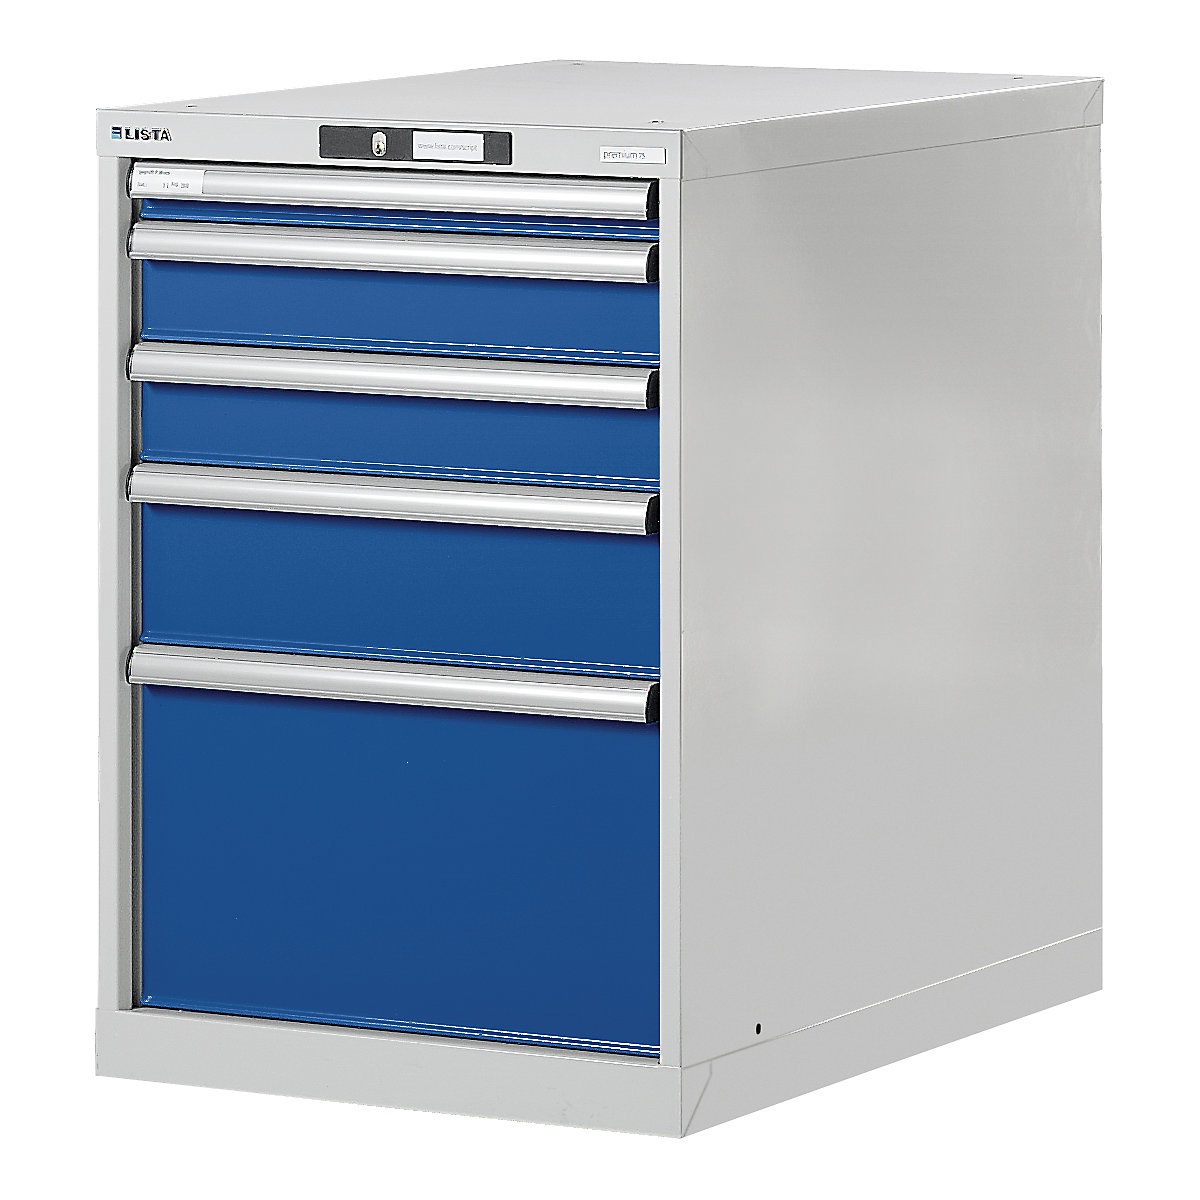 Modular workbench system, drawer unit – LISTA, height 800 mm, 5 drawers, gentian blue-4